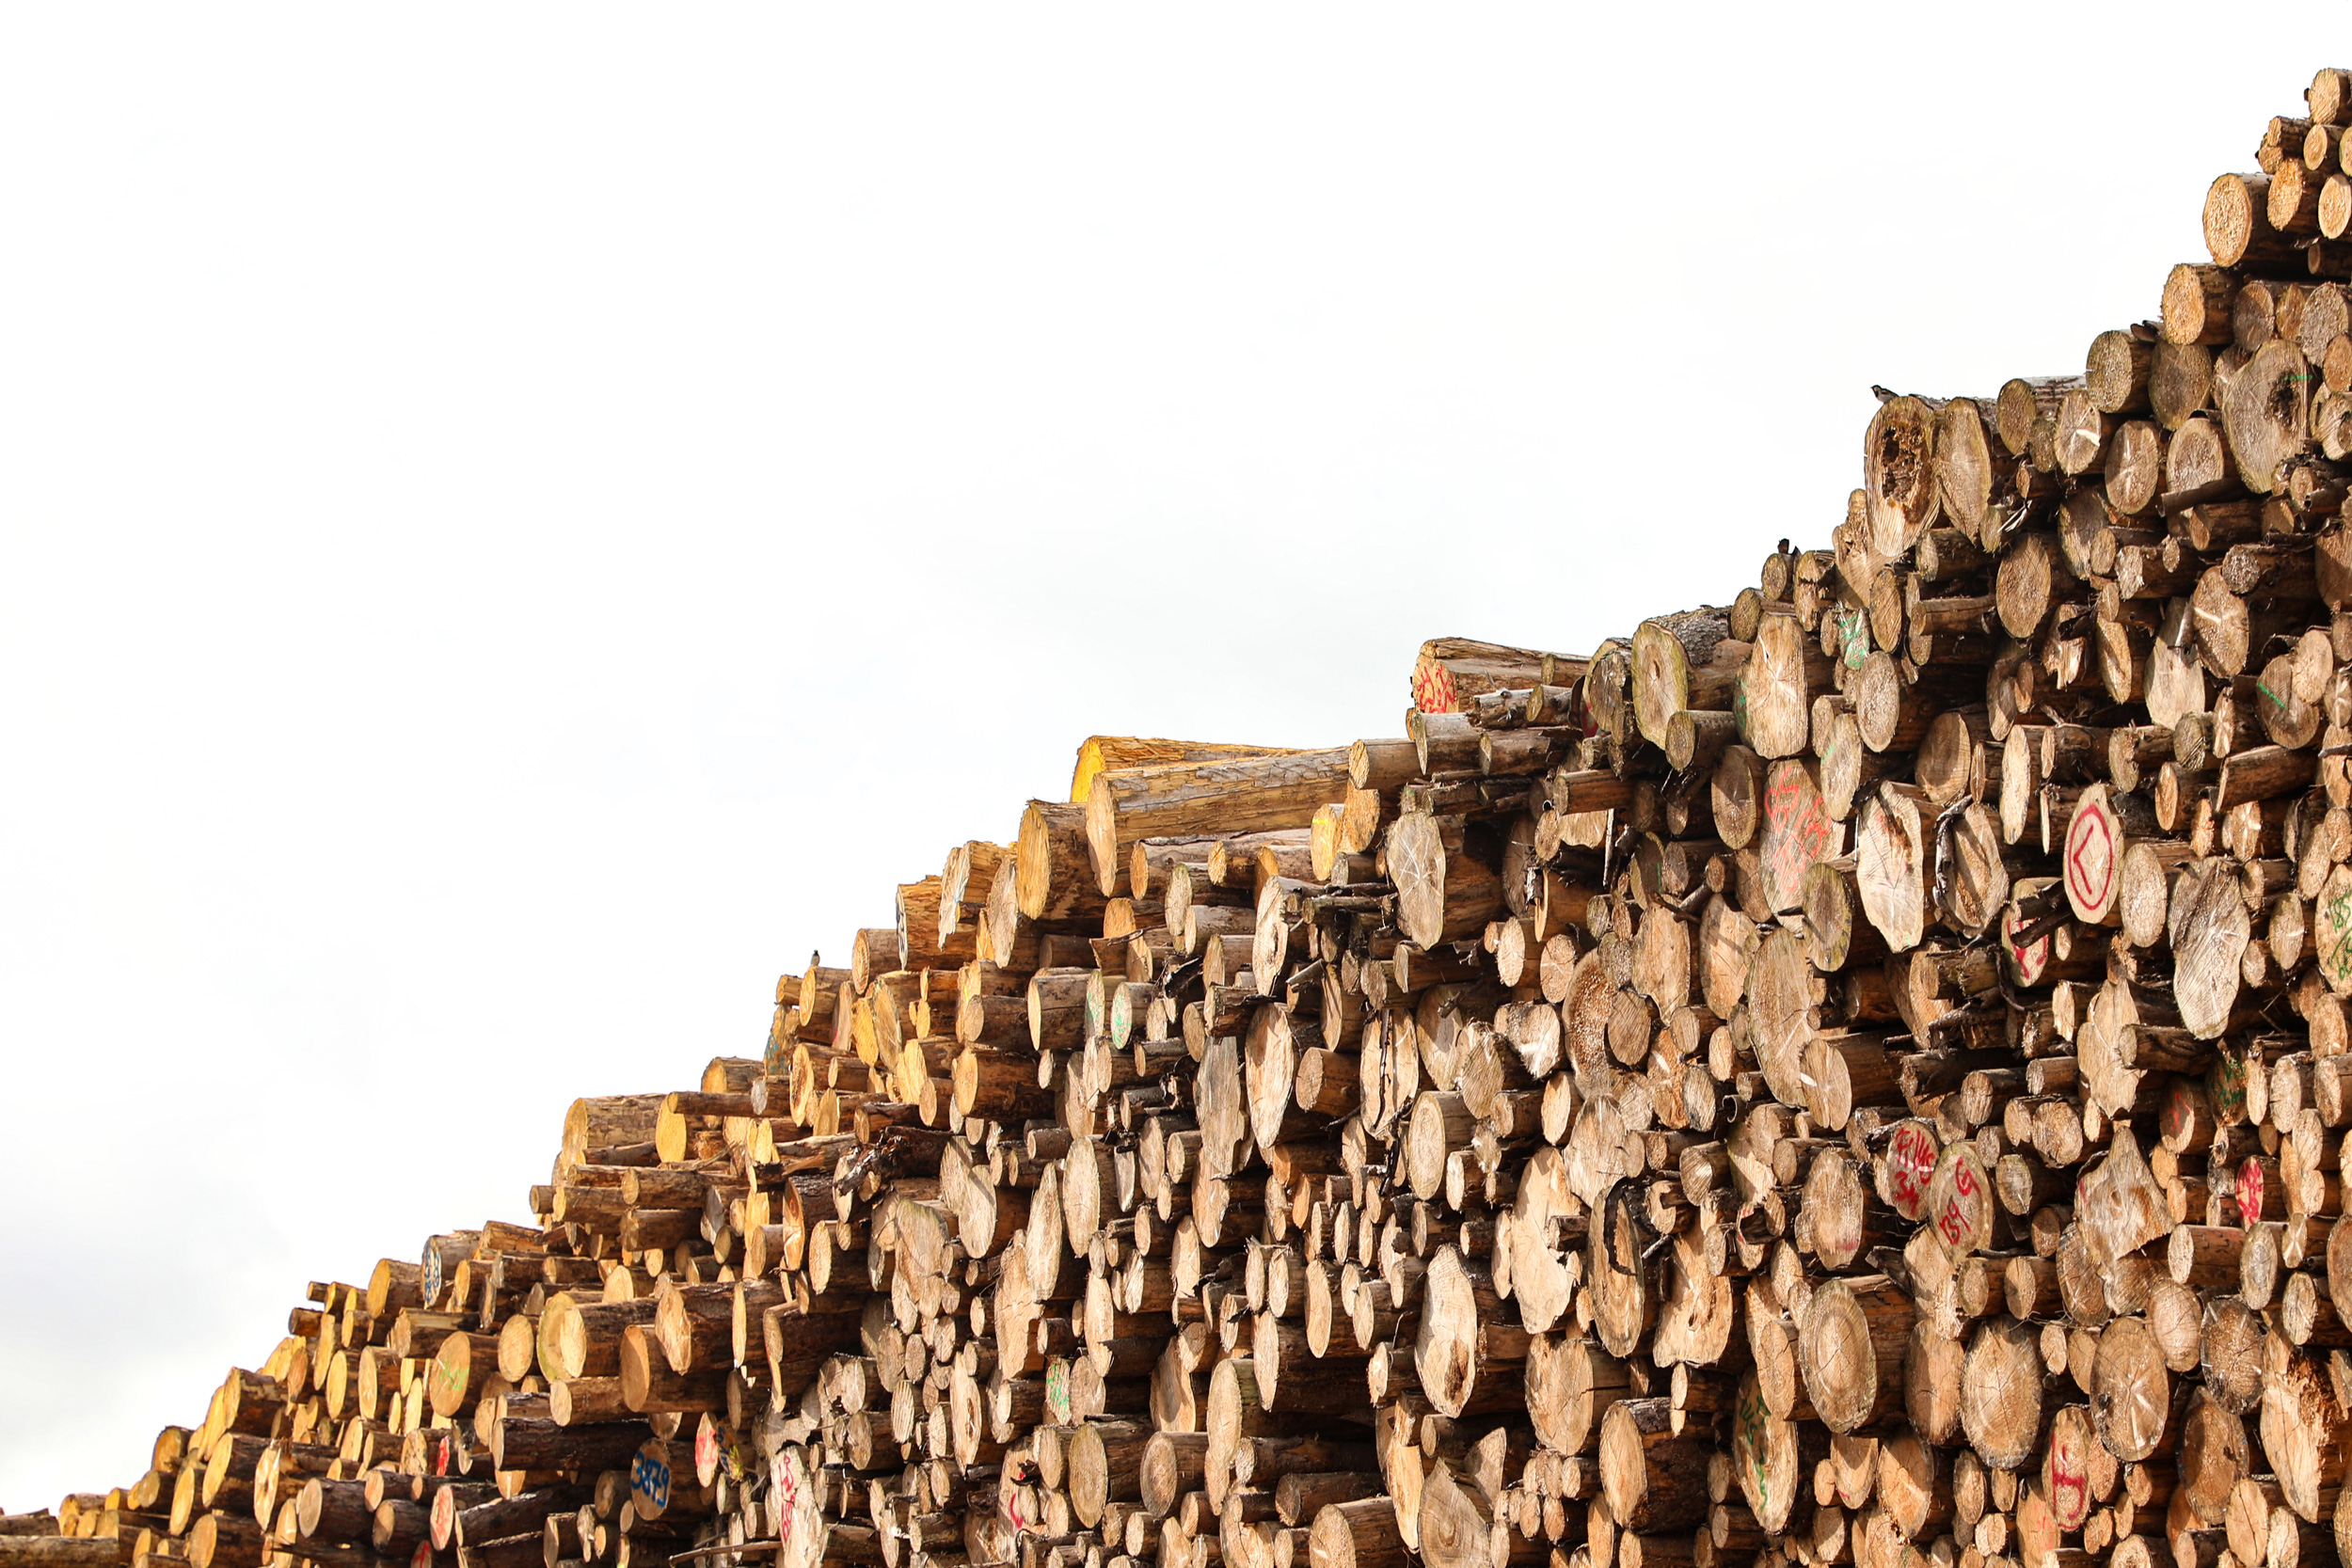 Holzhandlung Freytag Group Börde Pellets Brennholz Stapel mit Baumstämmen